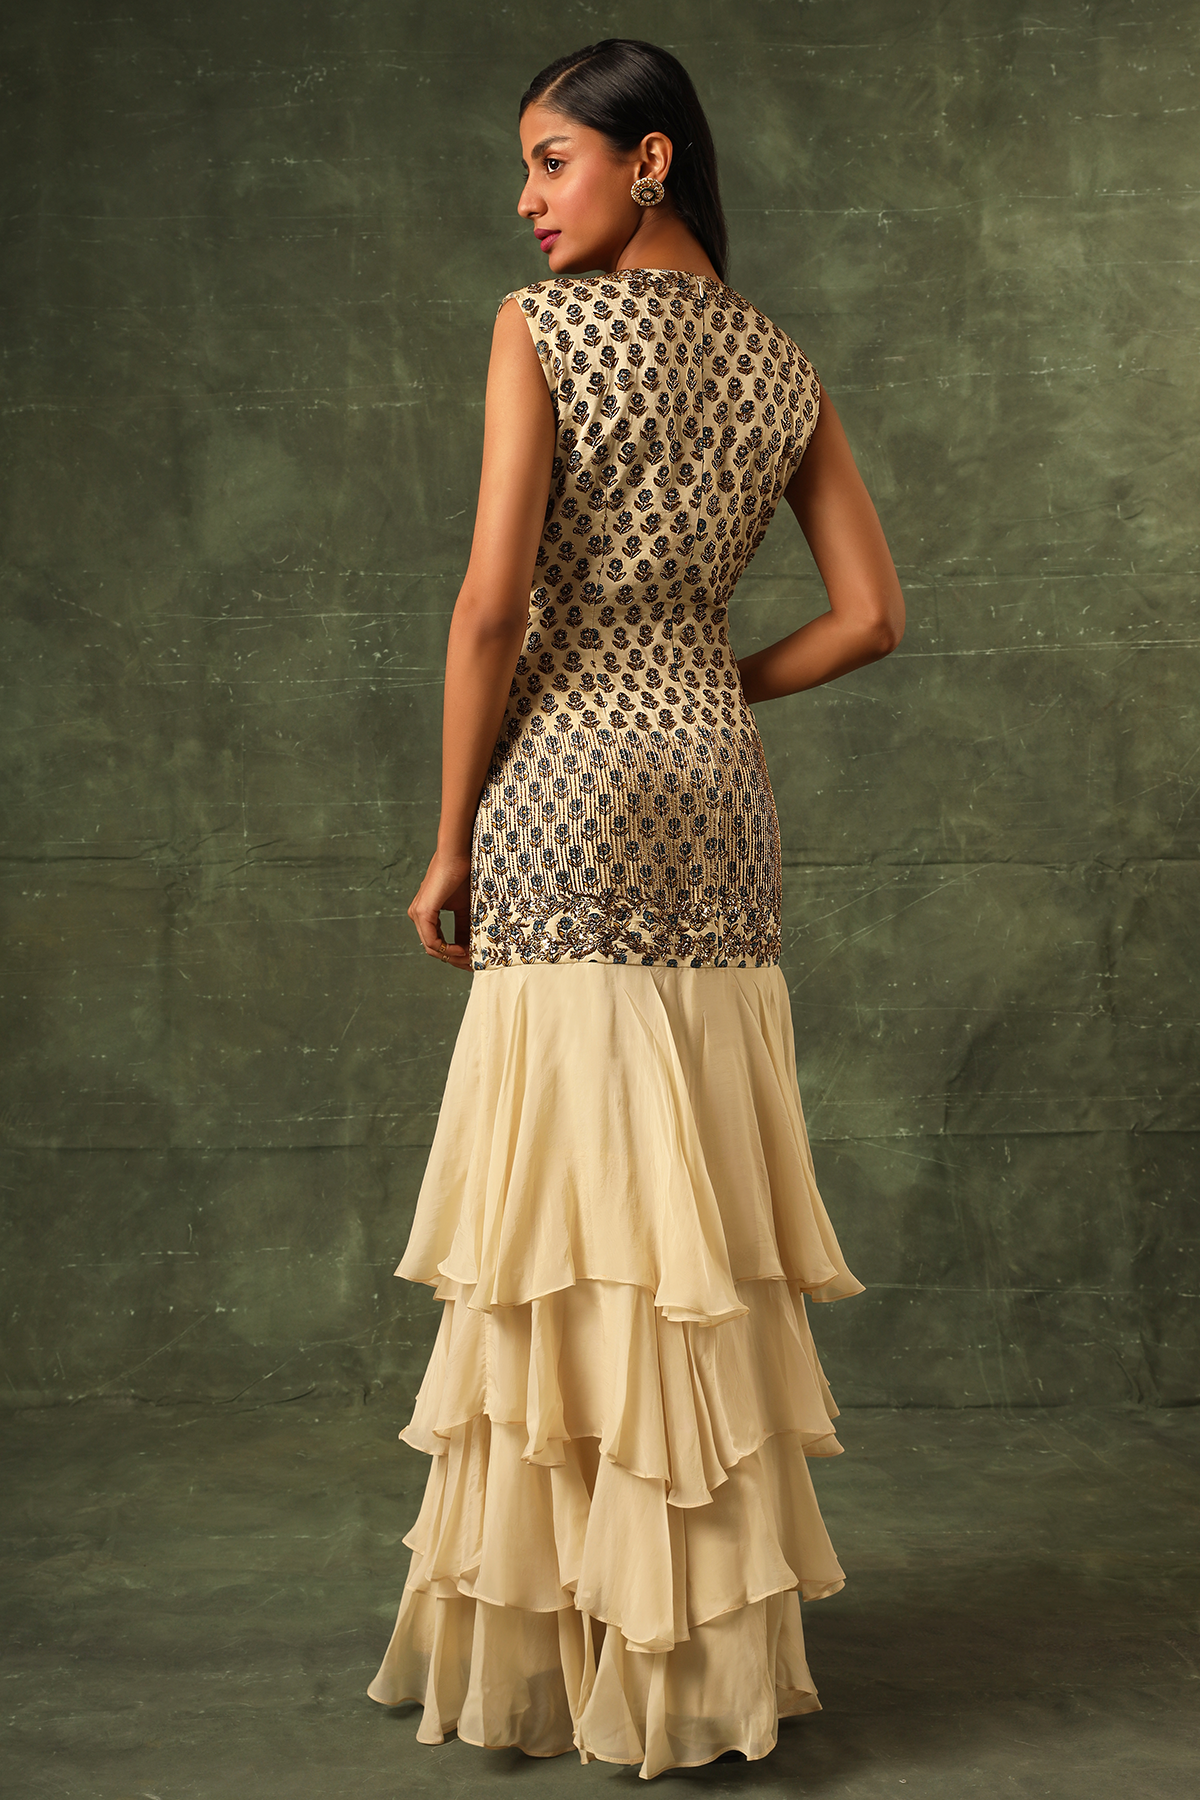 Ivory Four tiered ruffle dress